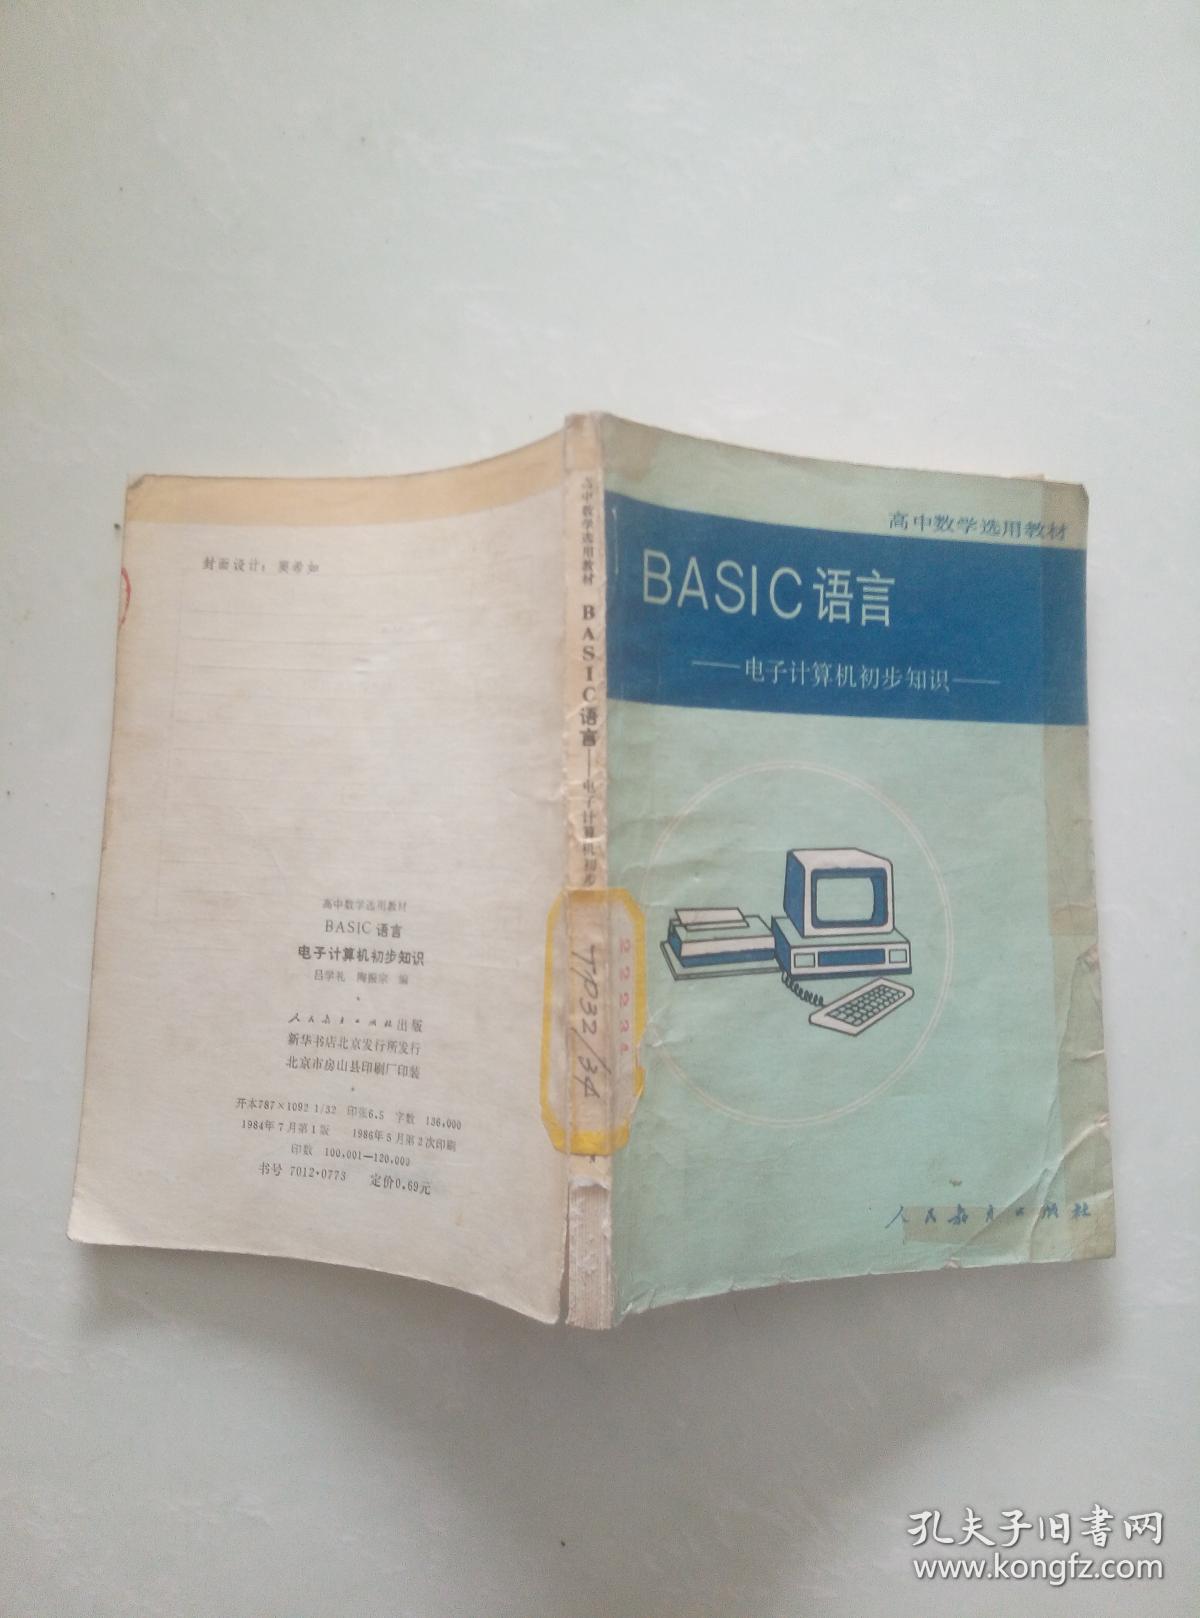 BASIC语言电子计算机初步知识